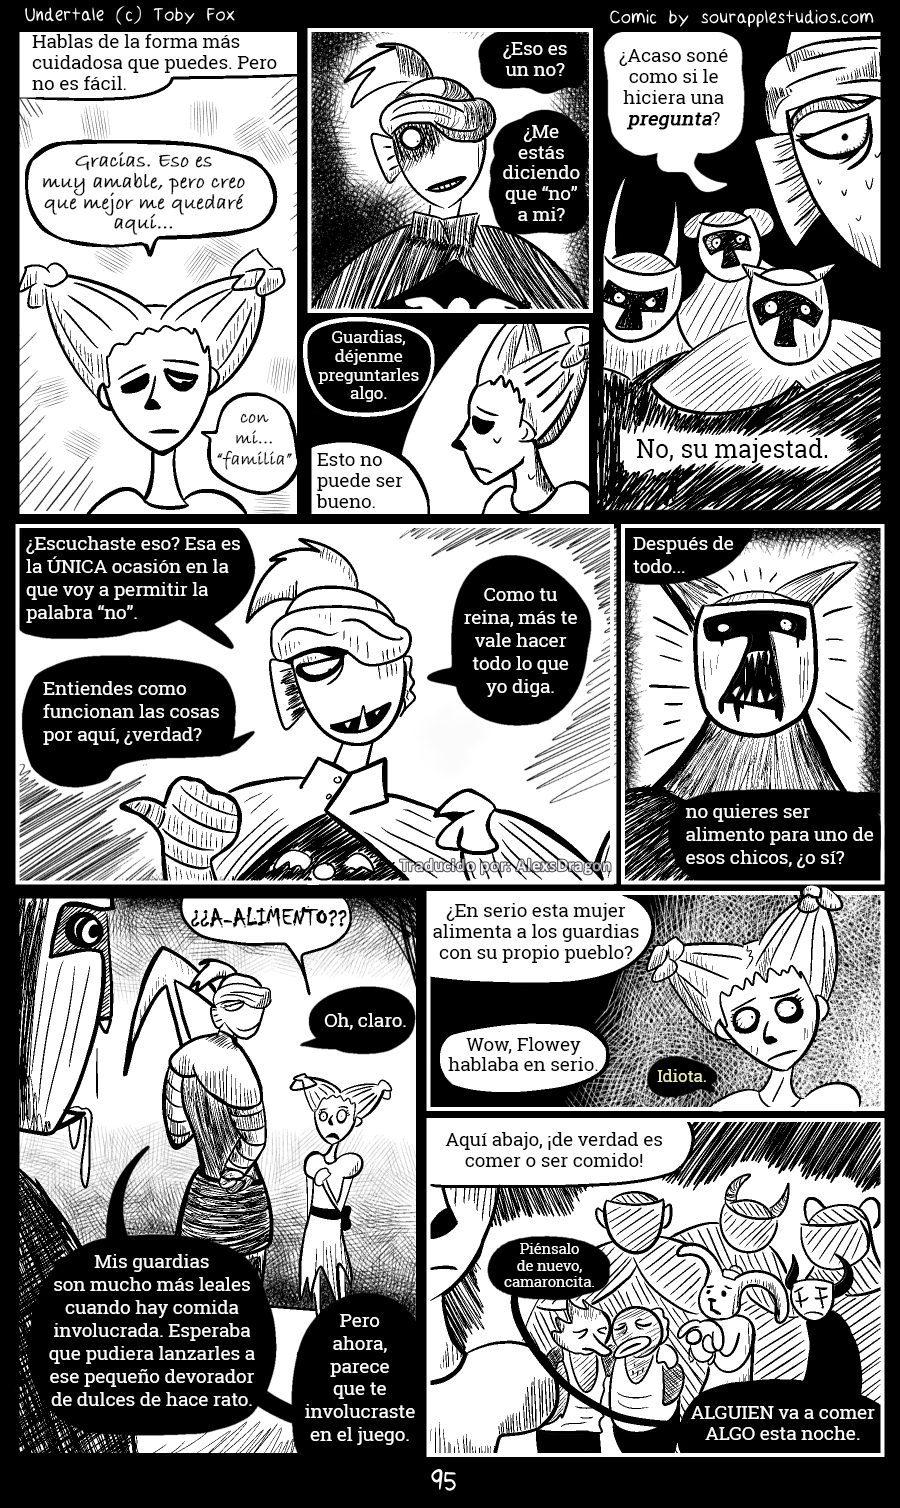 Horrortale capitulo 1 pagina 1 by pacmanilluminati on DeviantArt